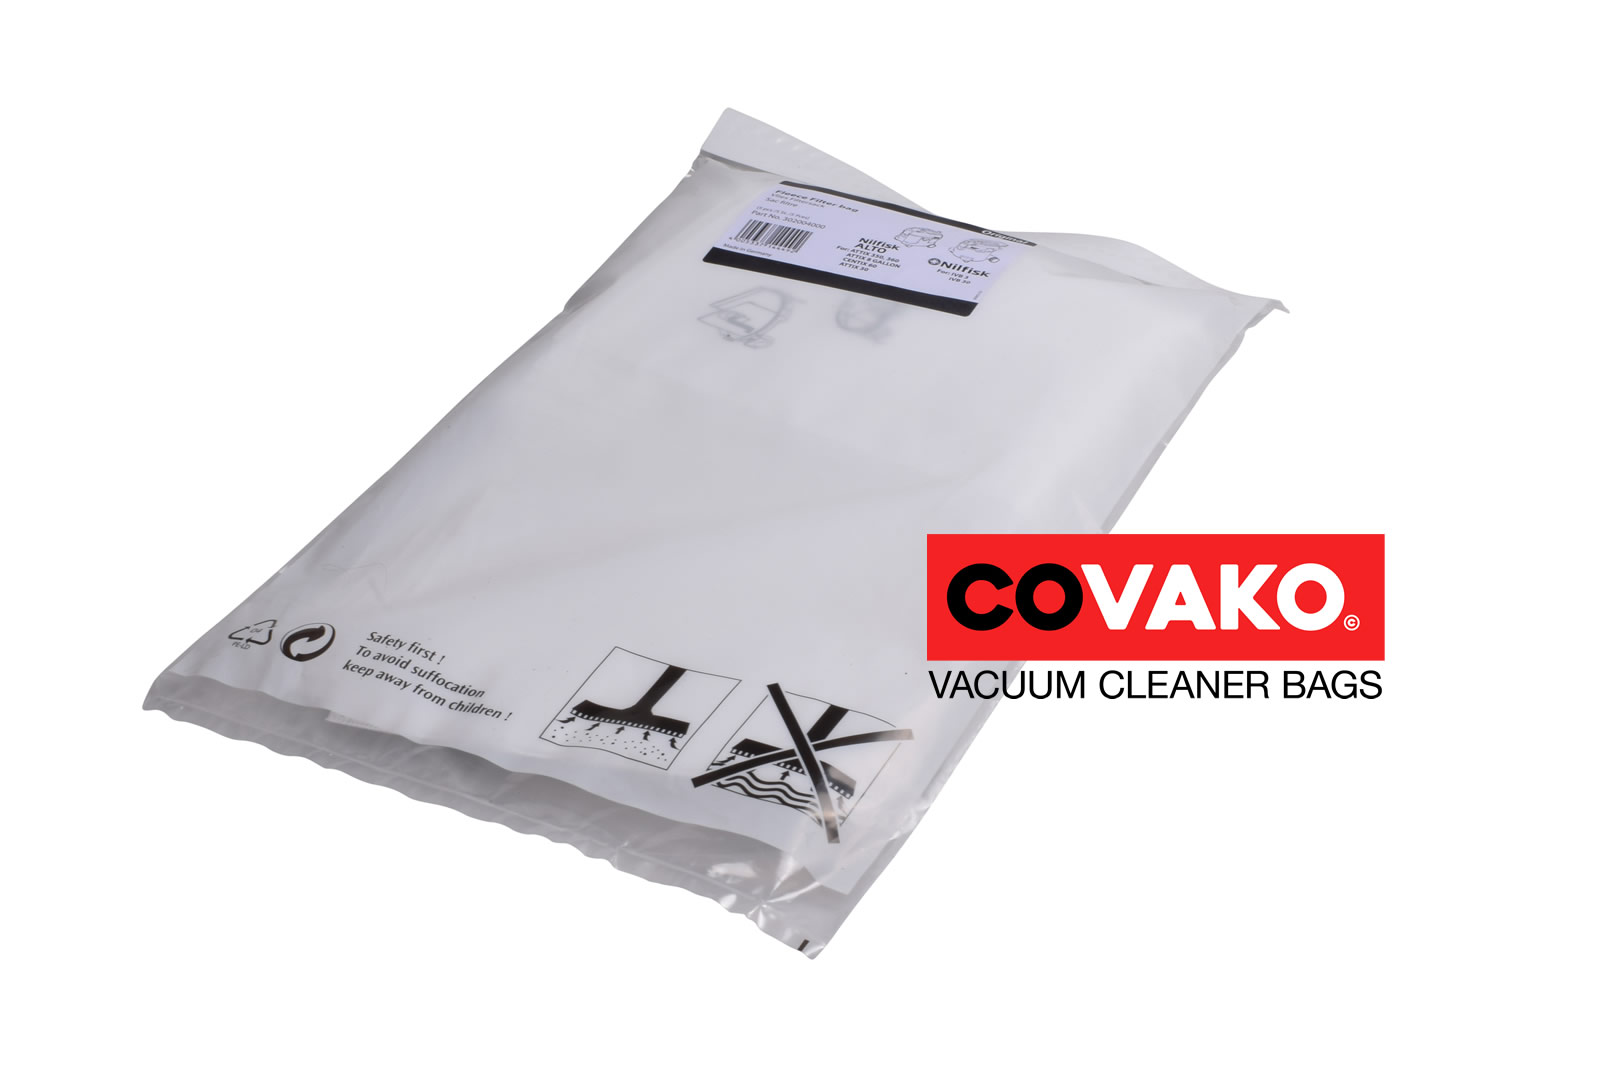 Wap Attix 360-01 / Synthesis - Wap vacuum cleaner bags